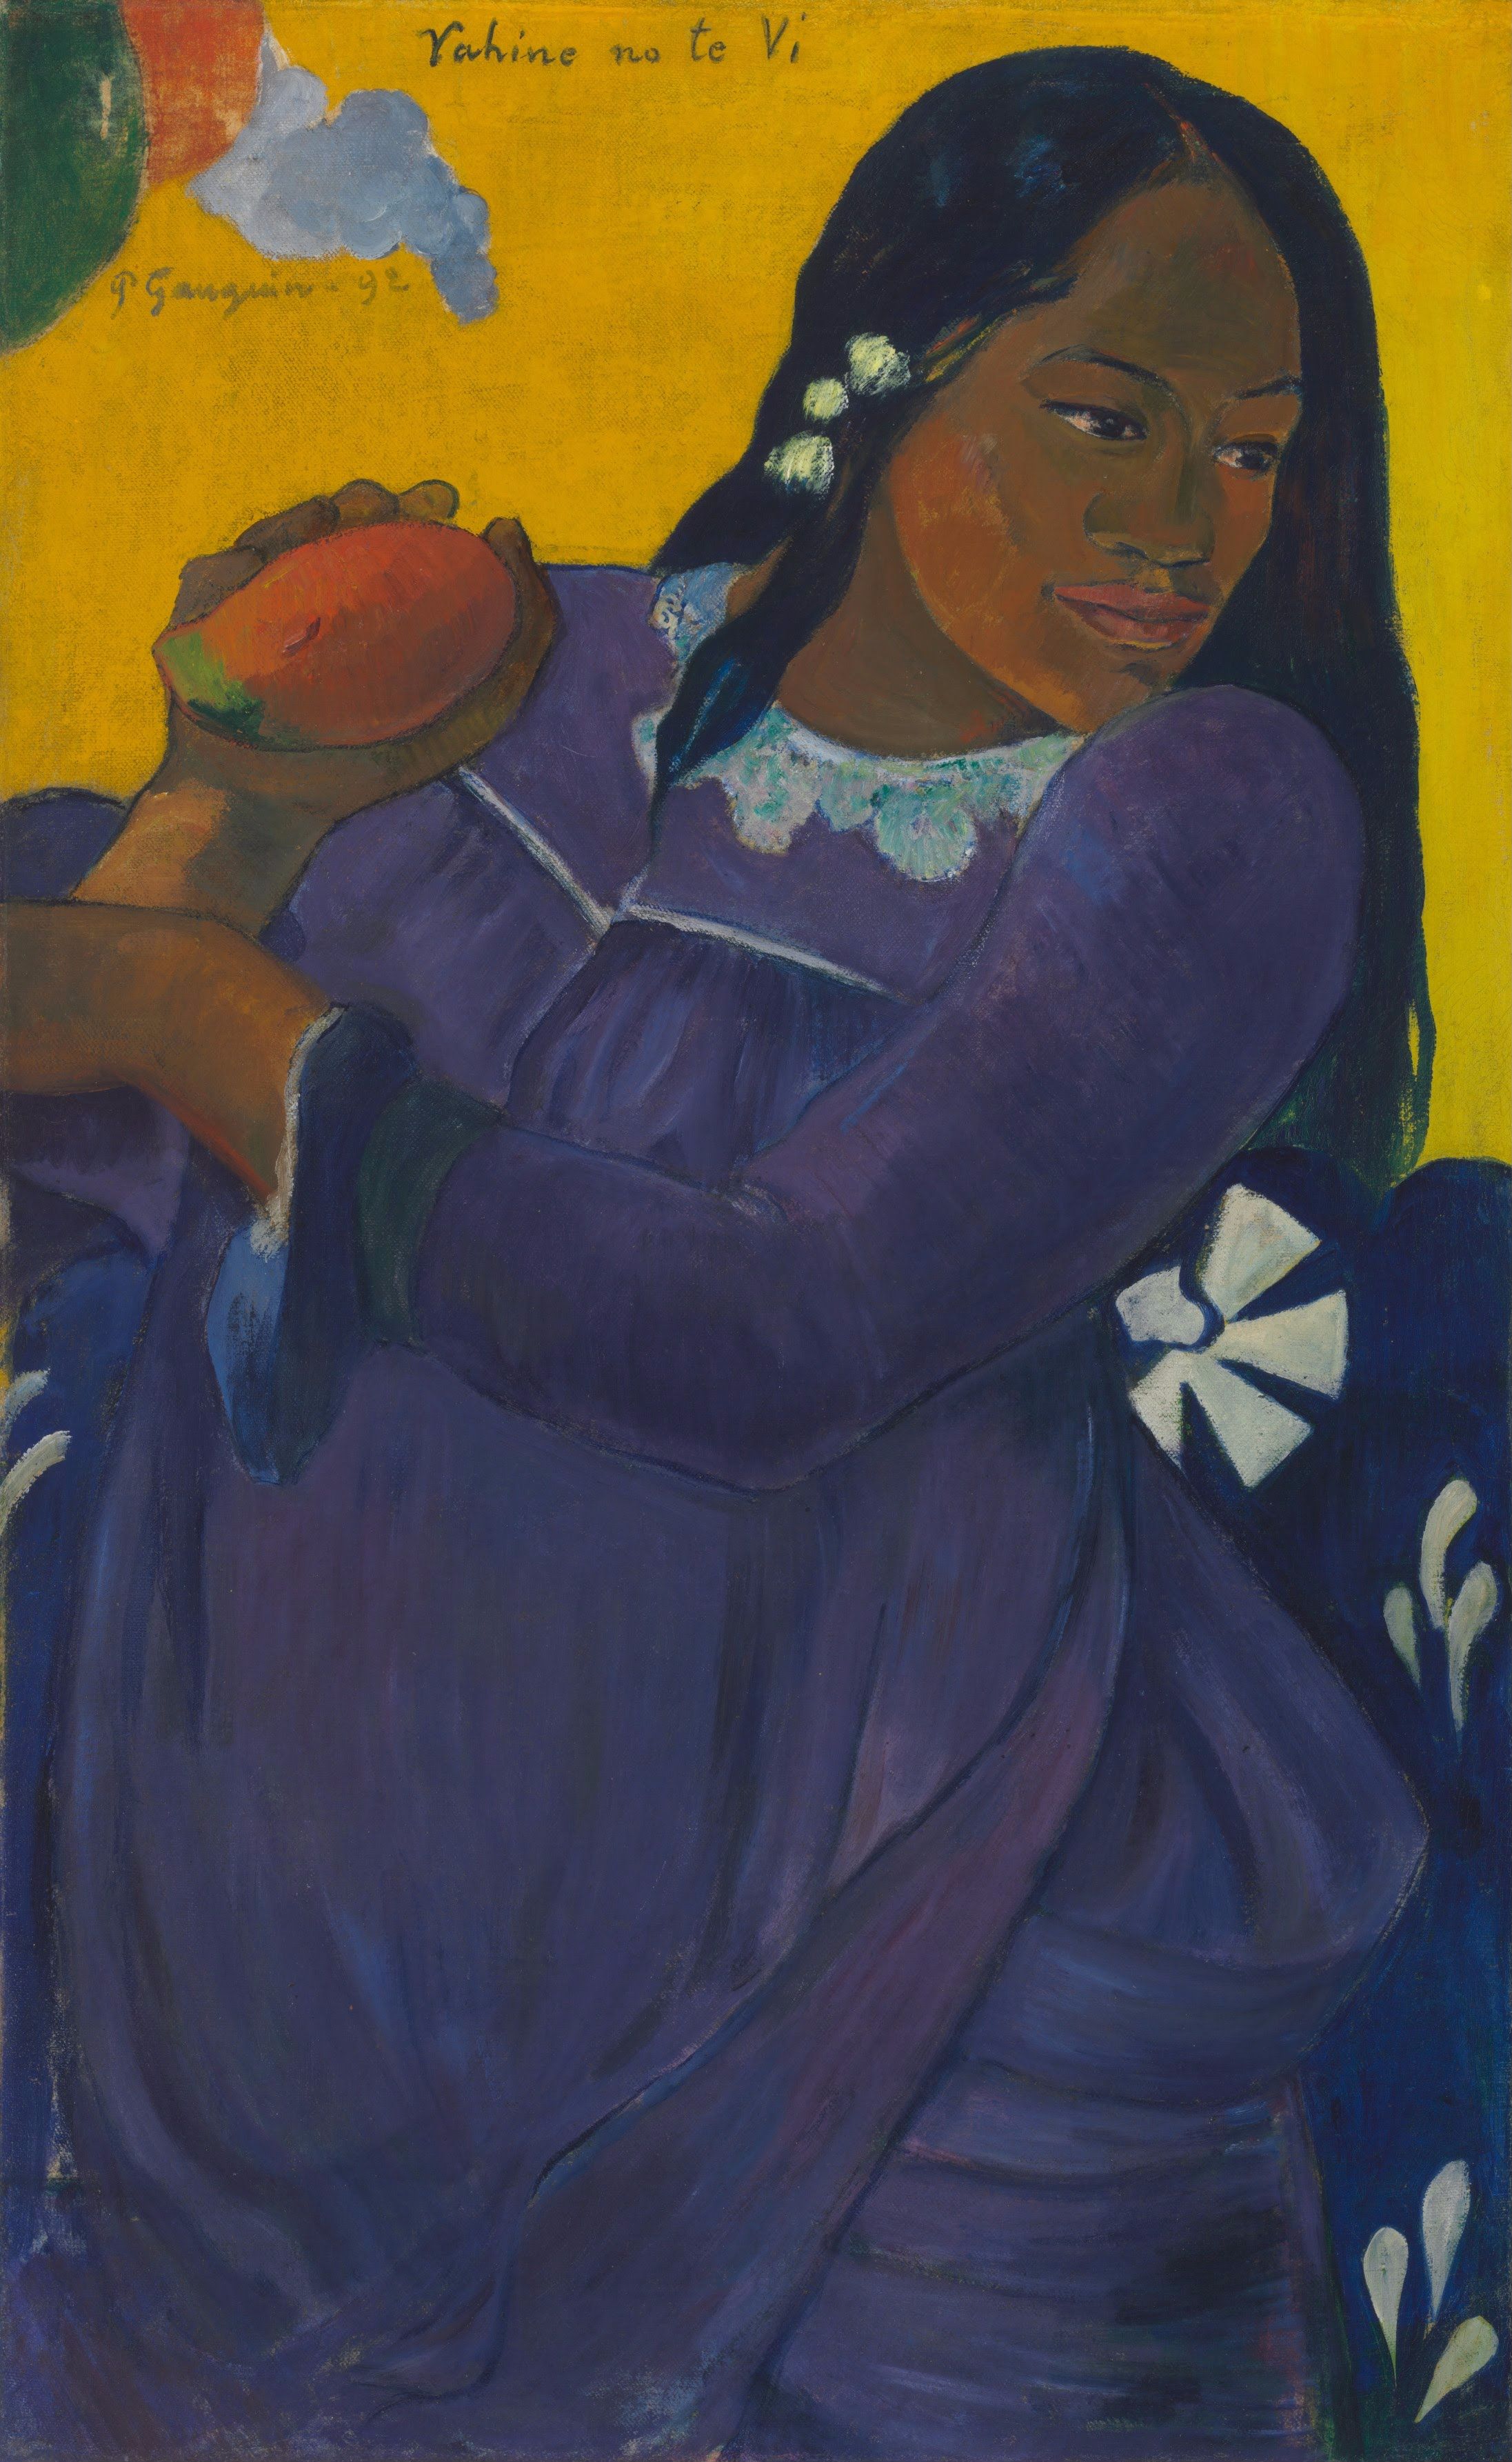 Vahine no te vi （手捧芒果的女人） by Paul Gauguin - 1892 - 193.5 x 103 厘米 